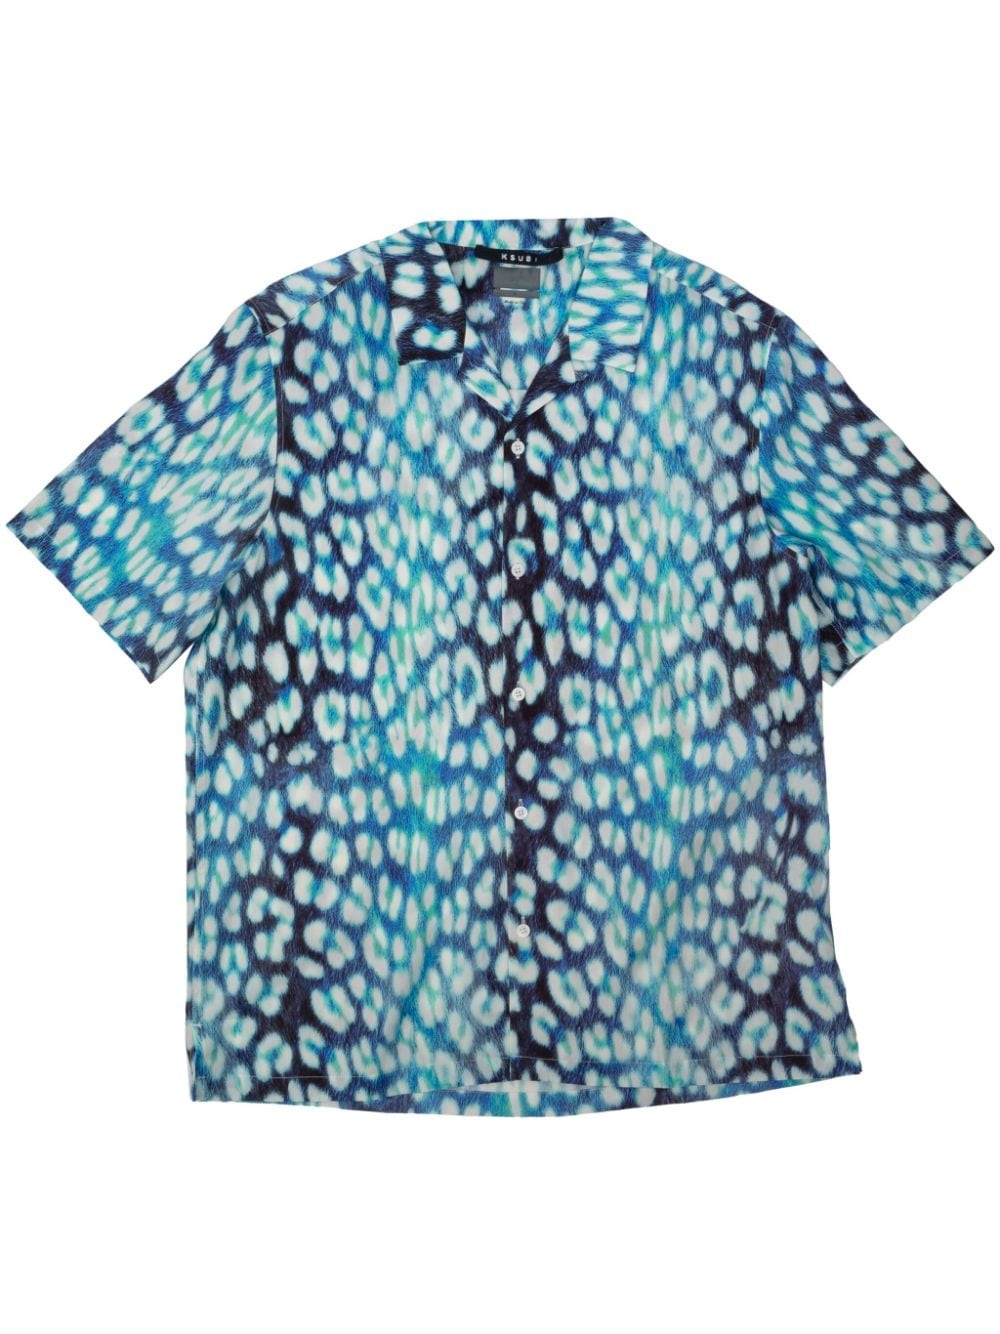 Ultra Leo tencel shirt - 1